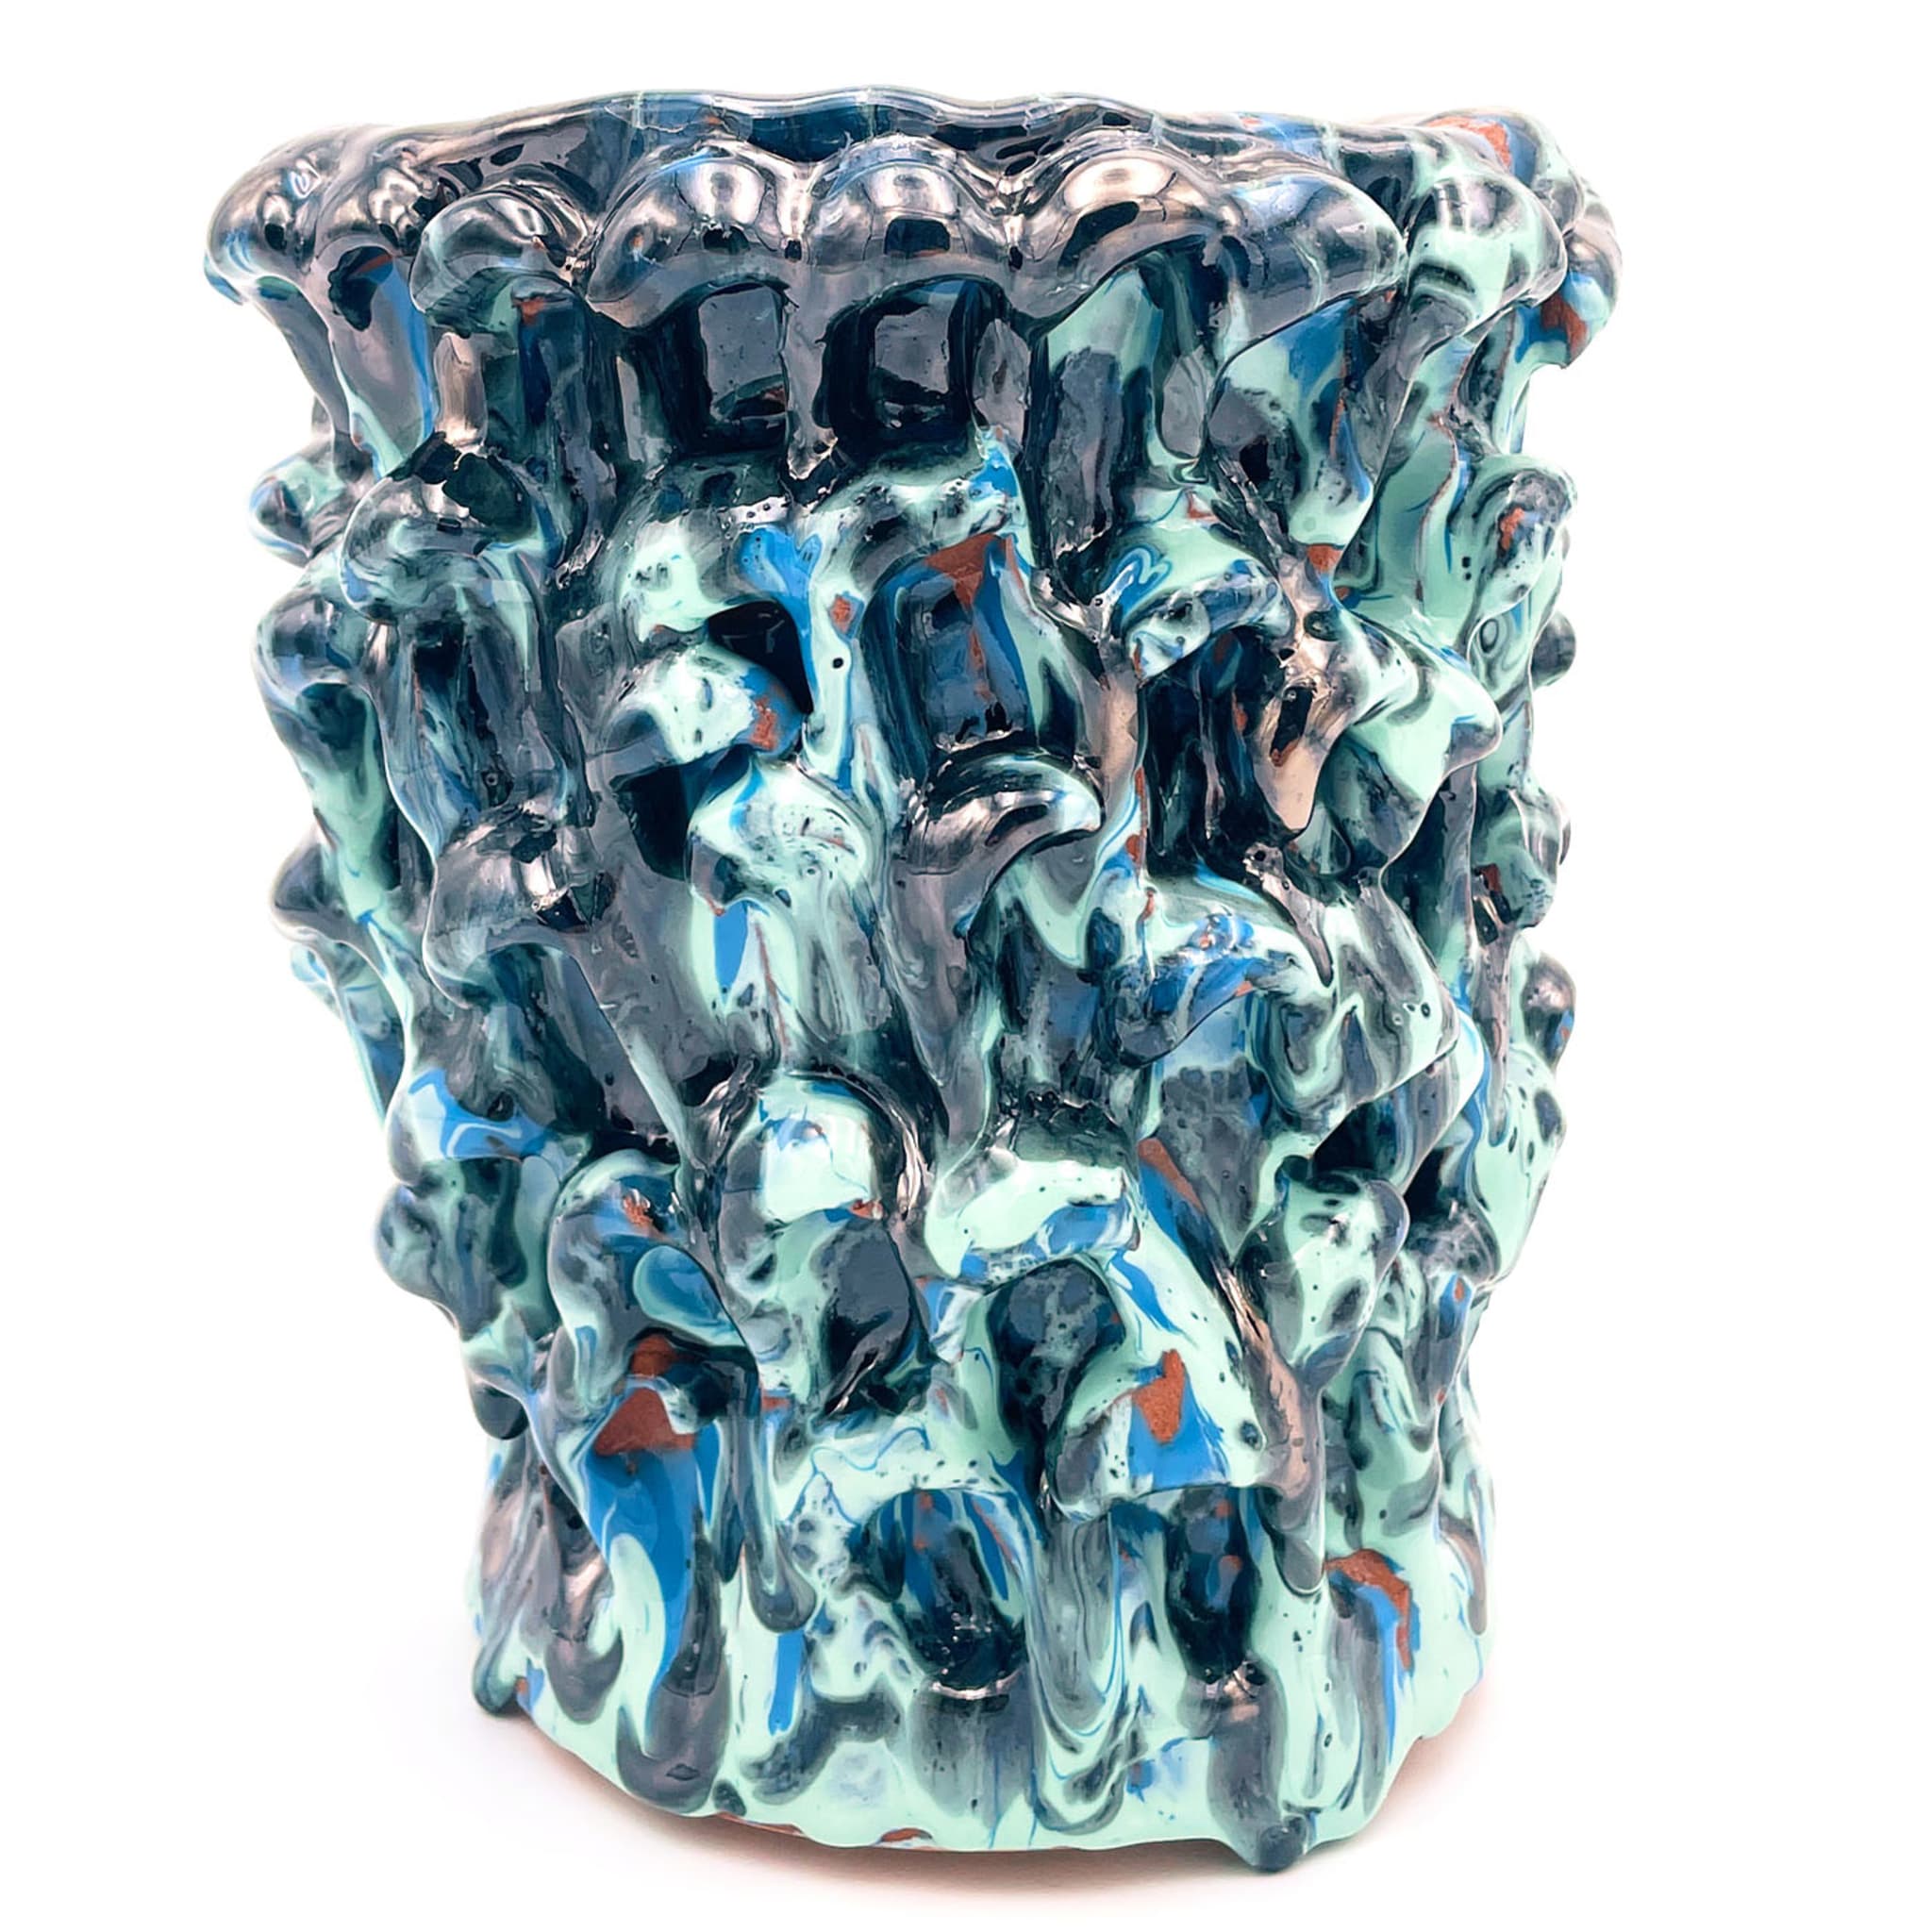 Onda Metallic Tiffany and Turquoise Vase - Alternative view 3